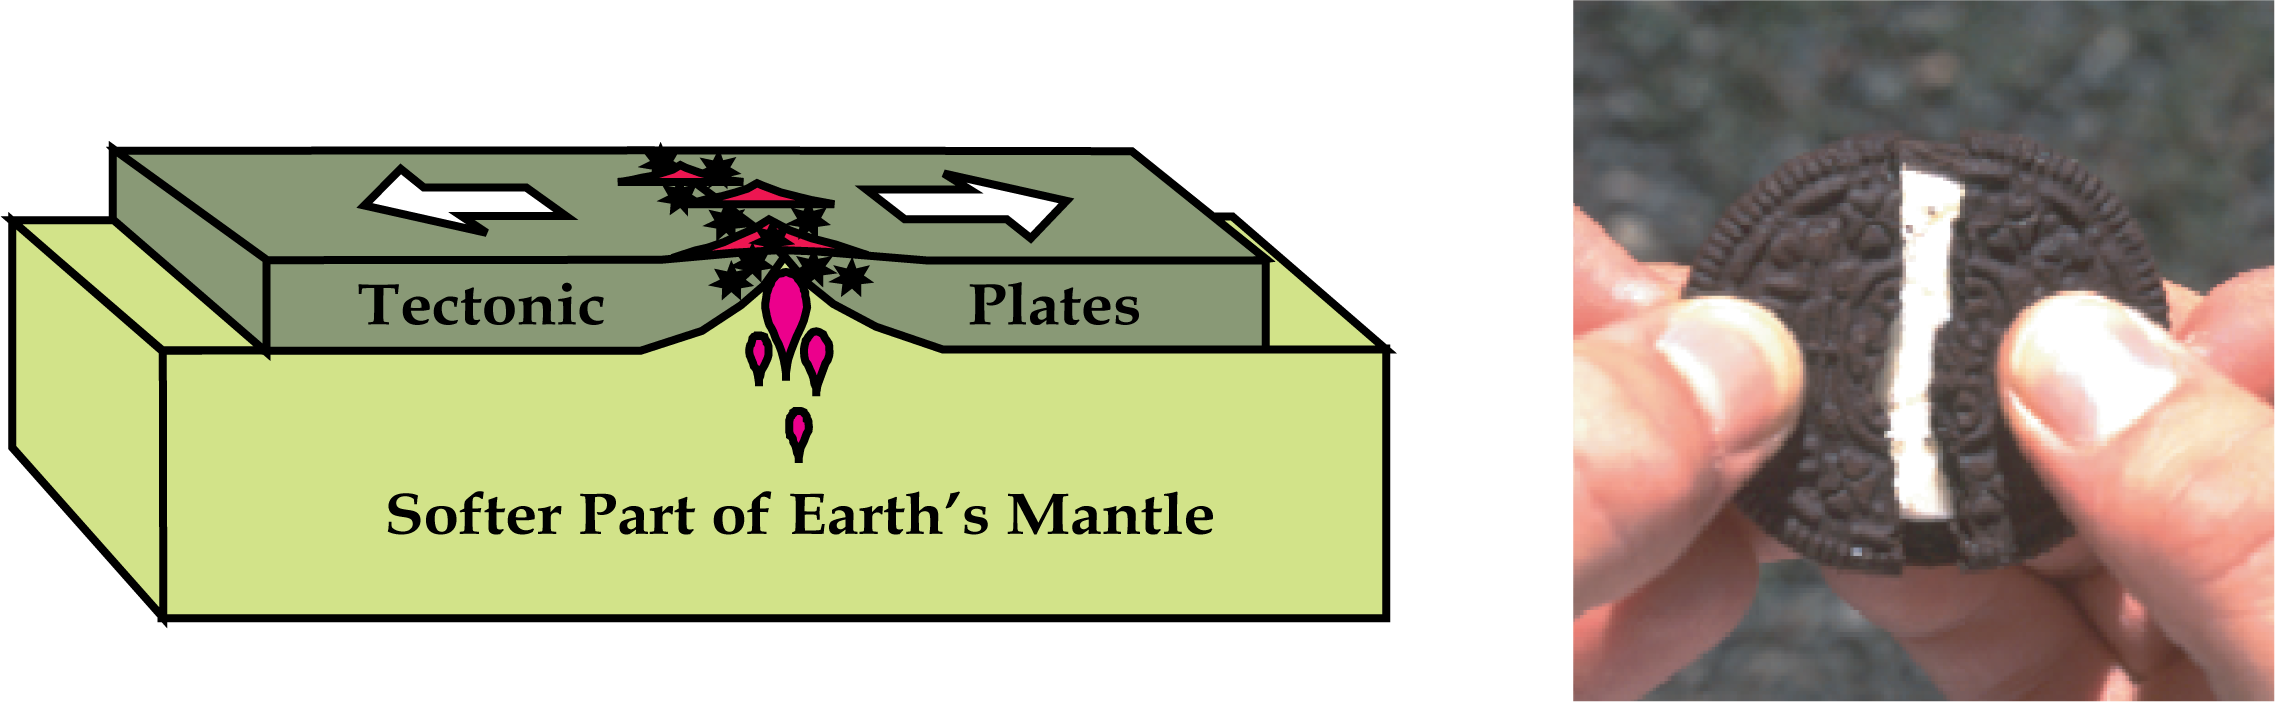 divergent plate boundaries examples